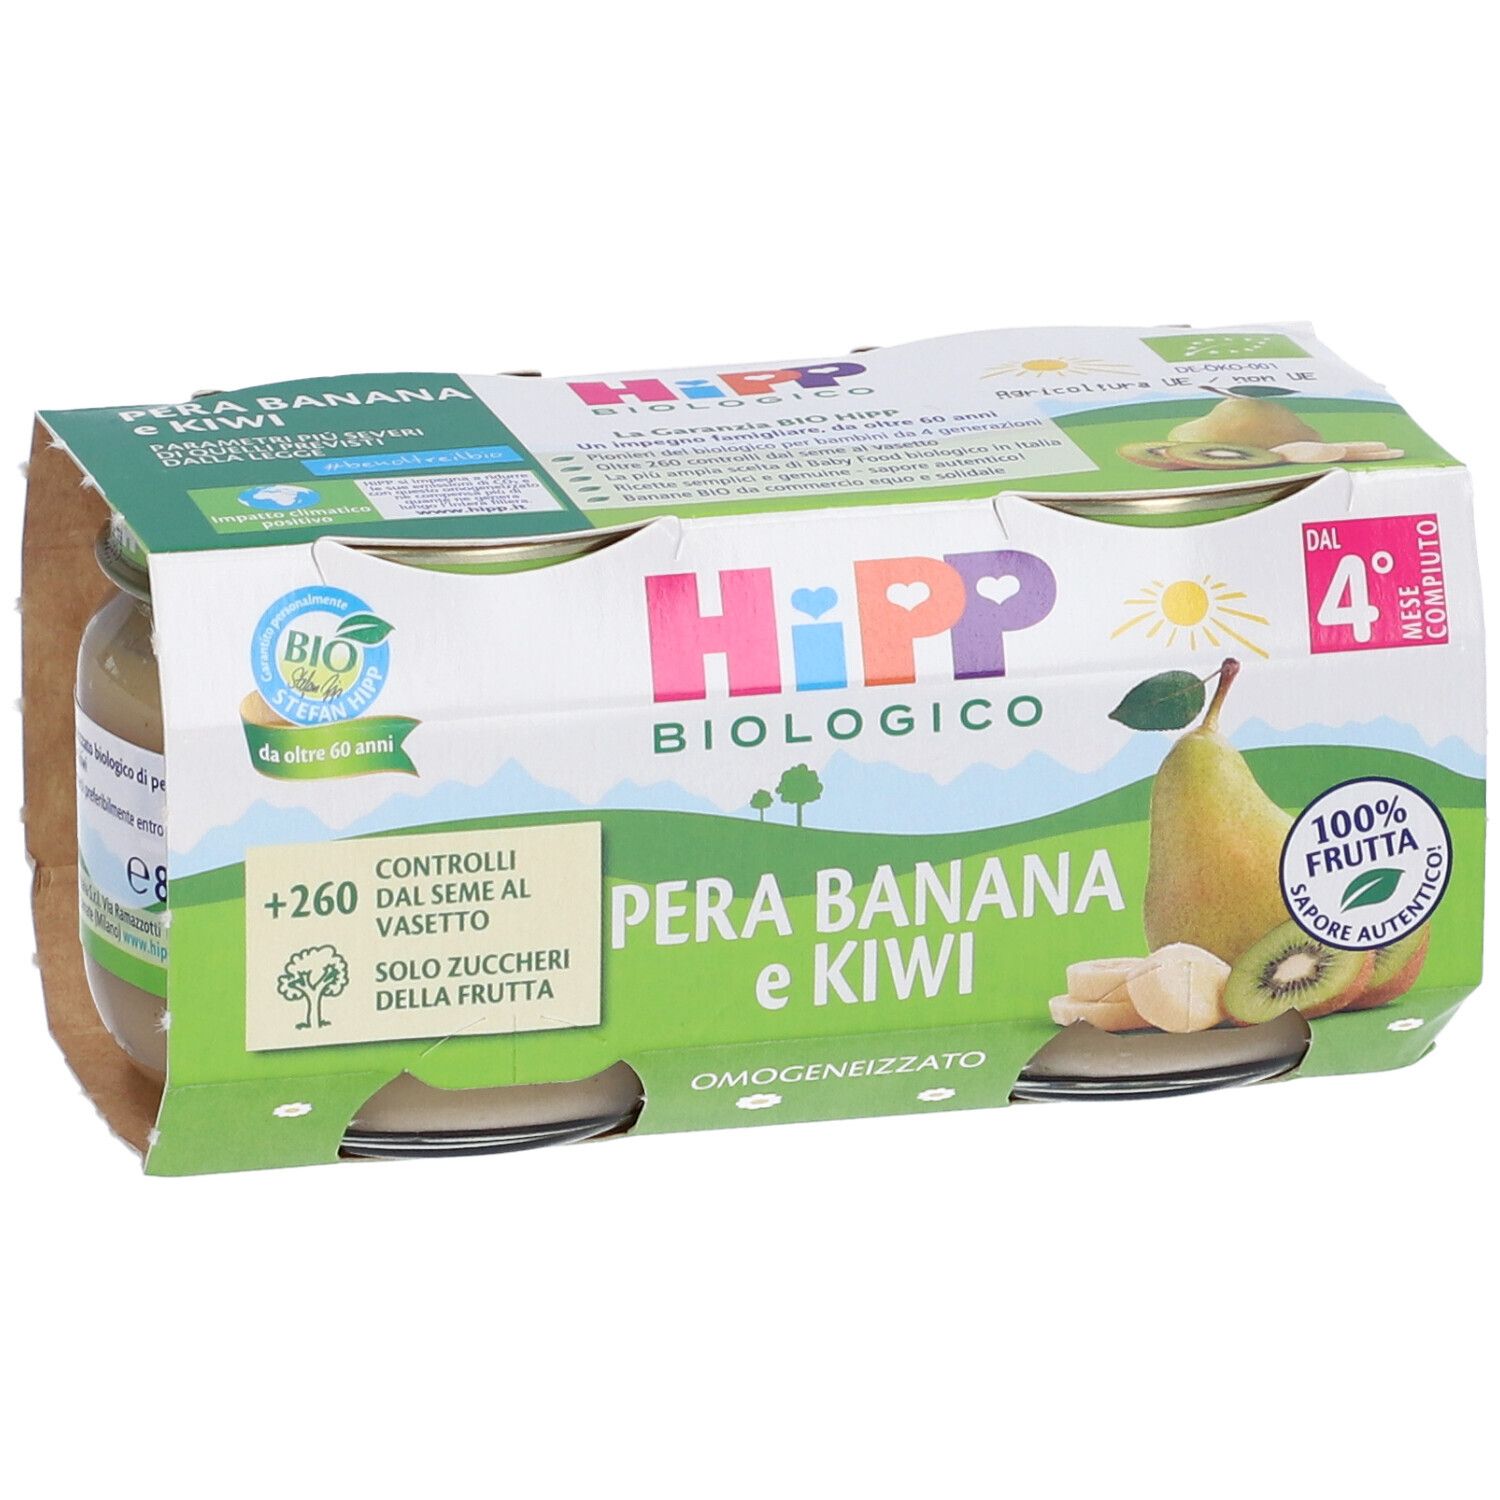 HiPP Biologico Pera Banana e Kiwi